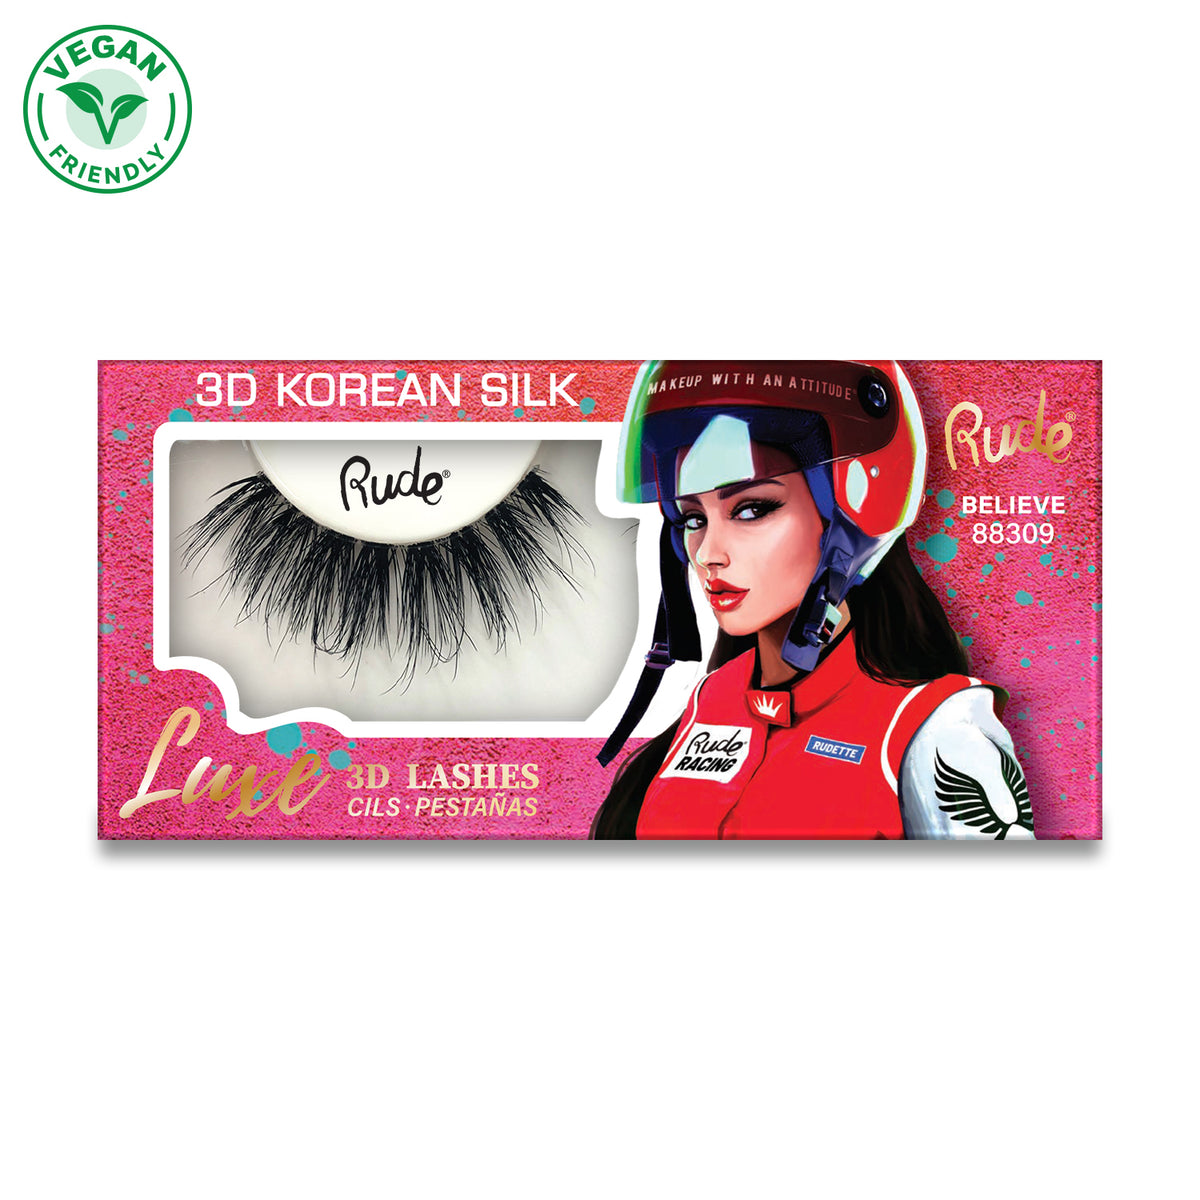 Luxe 3D Lashes | Premium 3D Eyelashes Believe